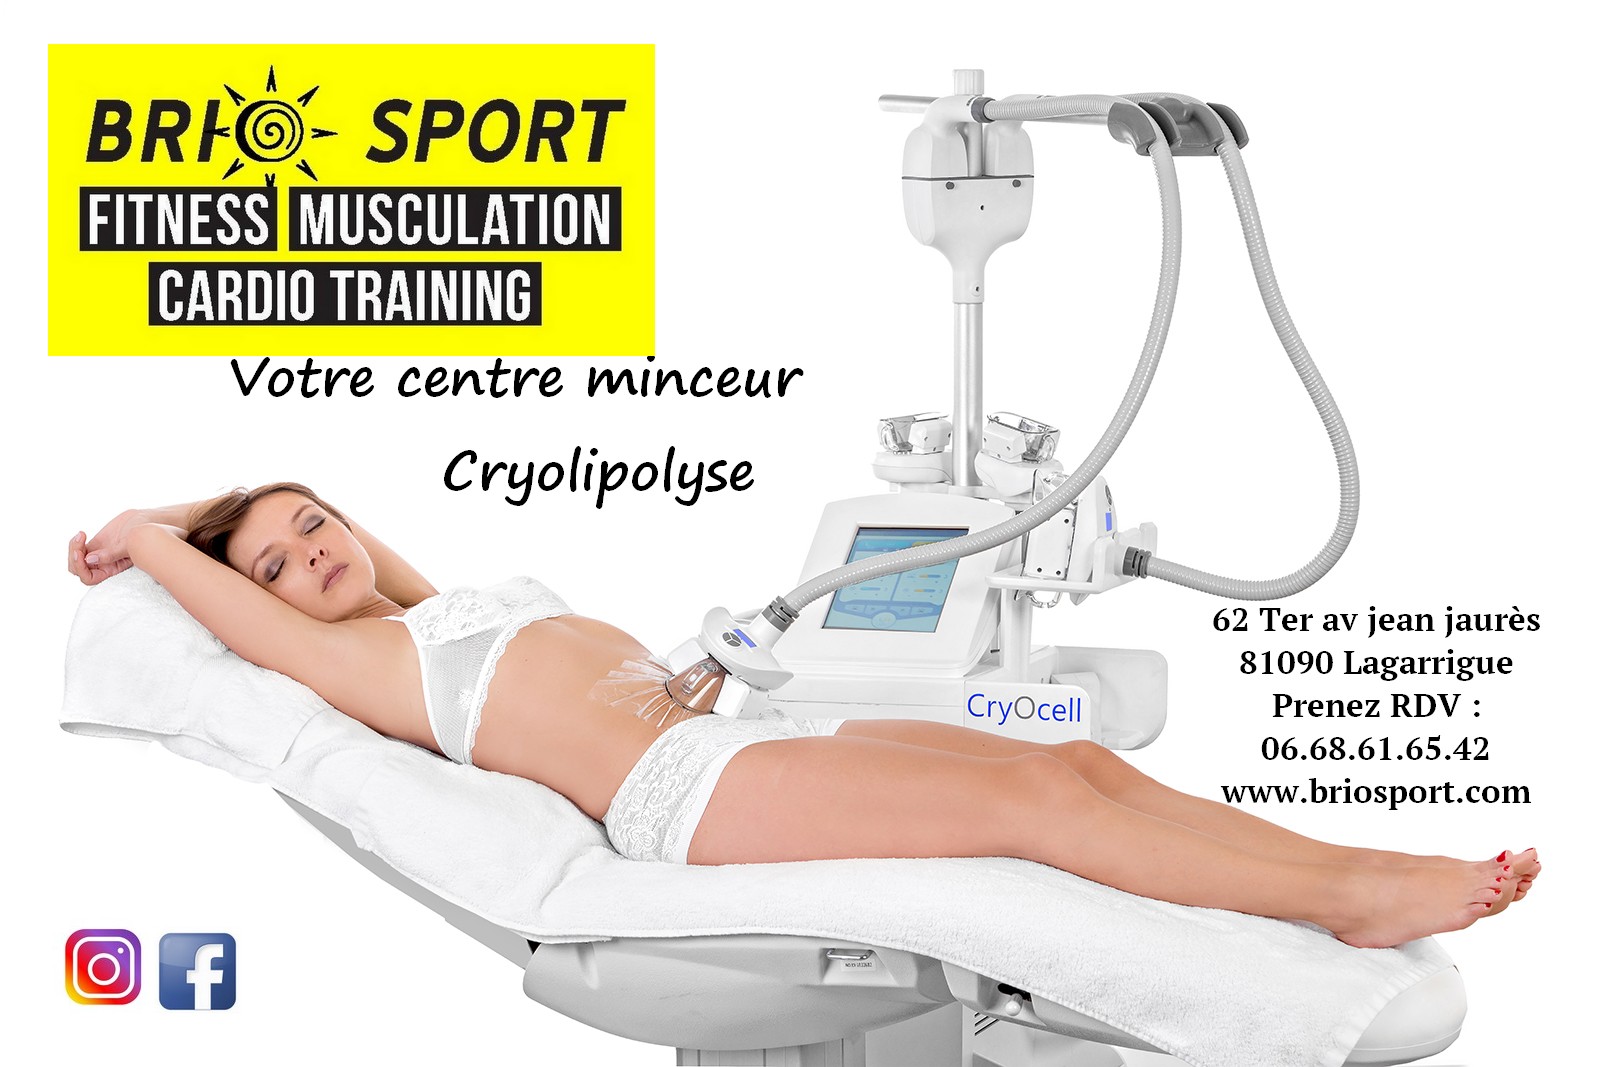 Salle de Sport Fitness Musculation Cardio- Maigrir Cryolipolyse -Cryothérapie- Castres - Lagarrigue- Labrugiere- Valdurenque- Mazamet- Bien être